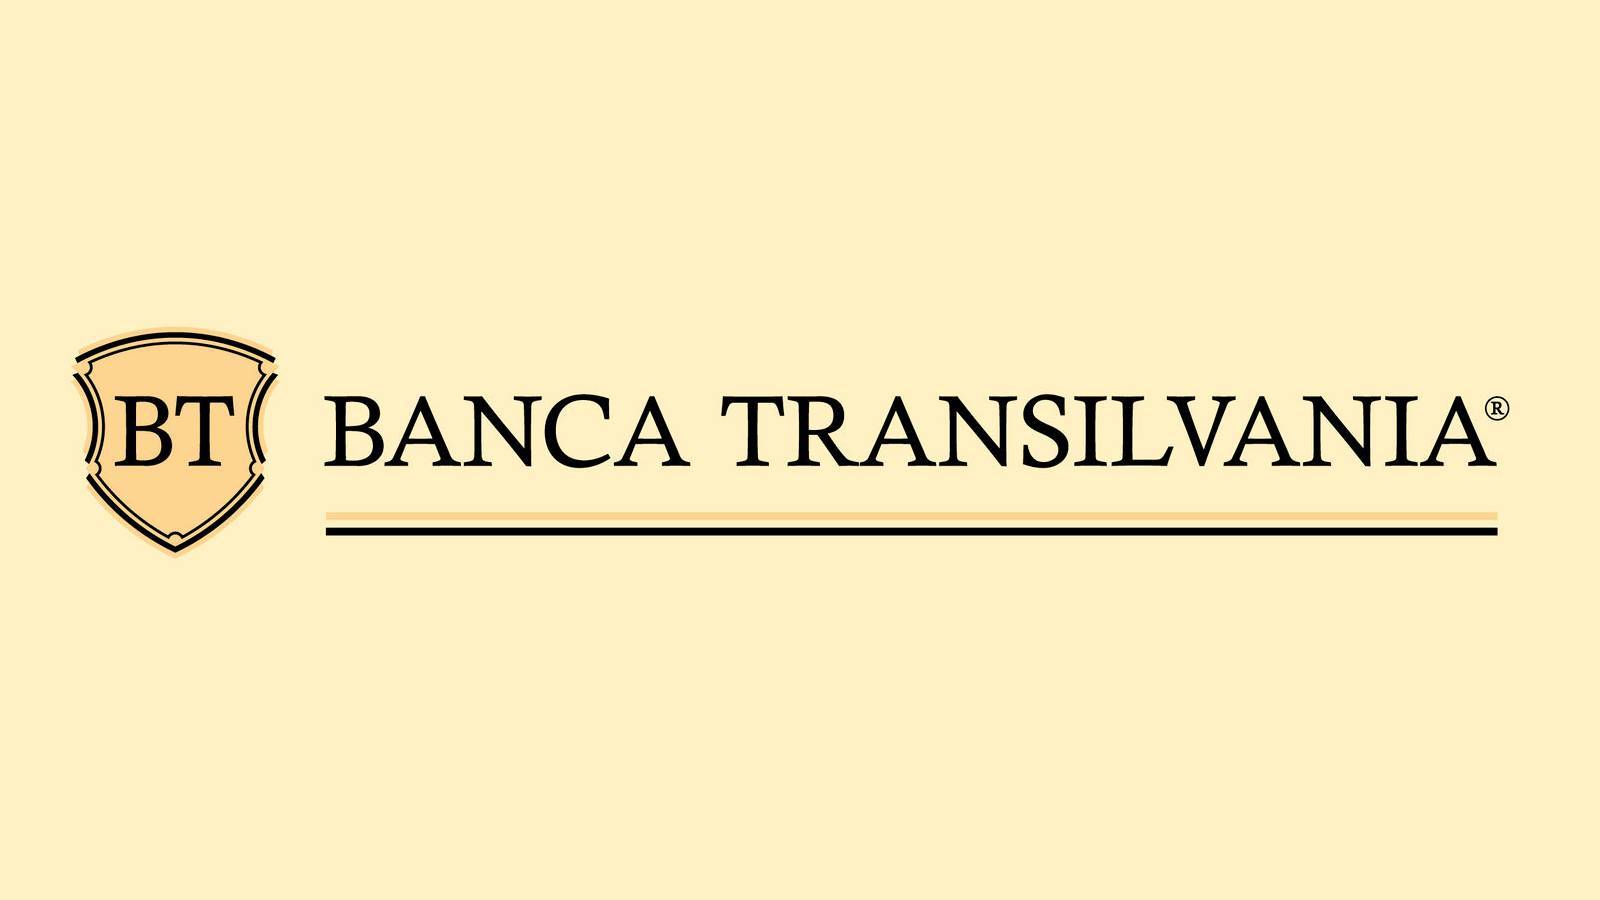 BANCA Transilvania Masuri Oficiale ULTIM MOMENT Luate Clientii Romania